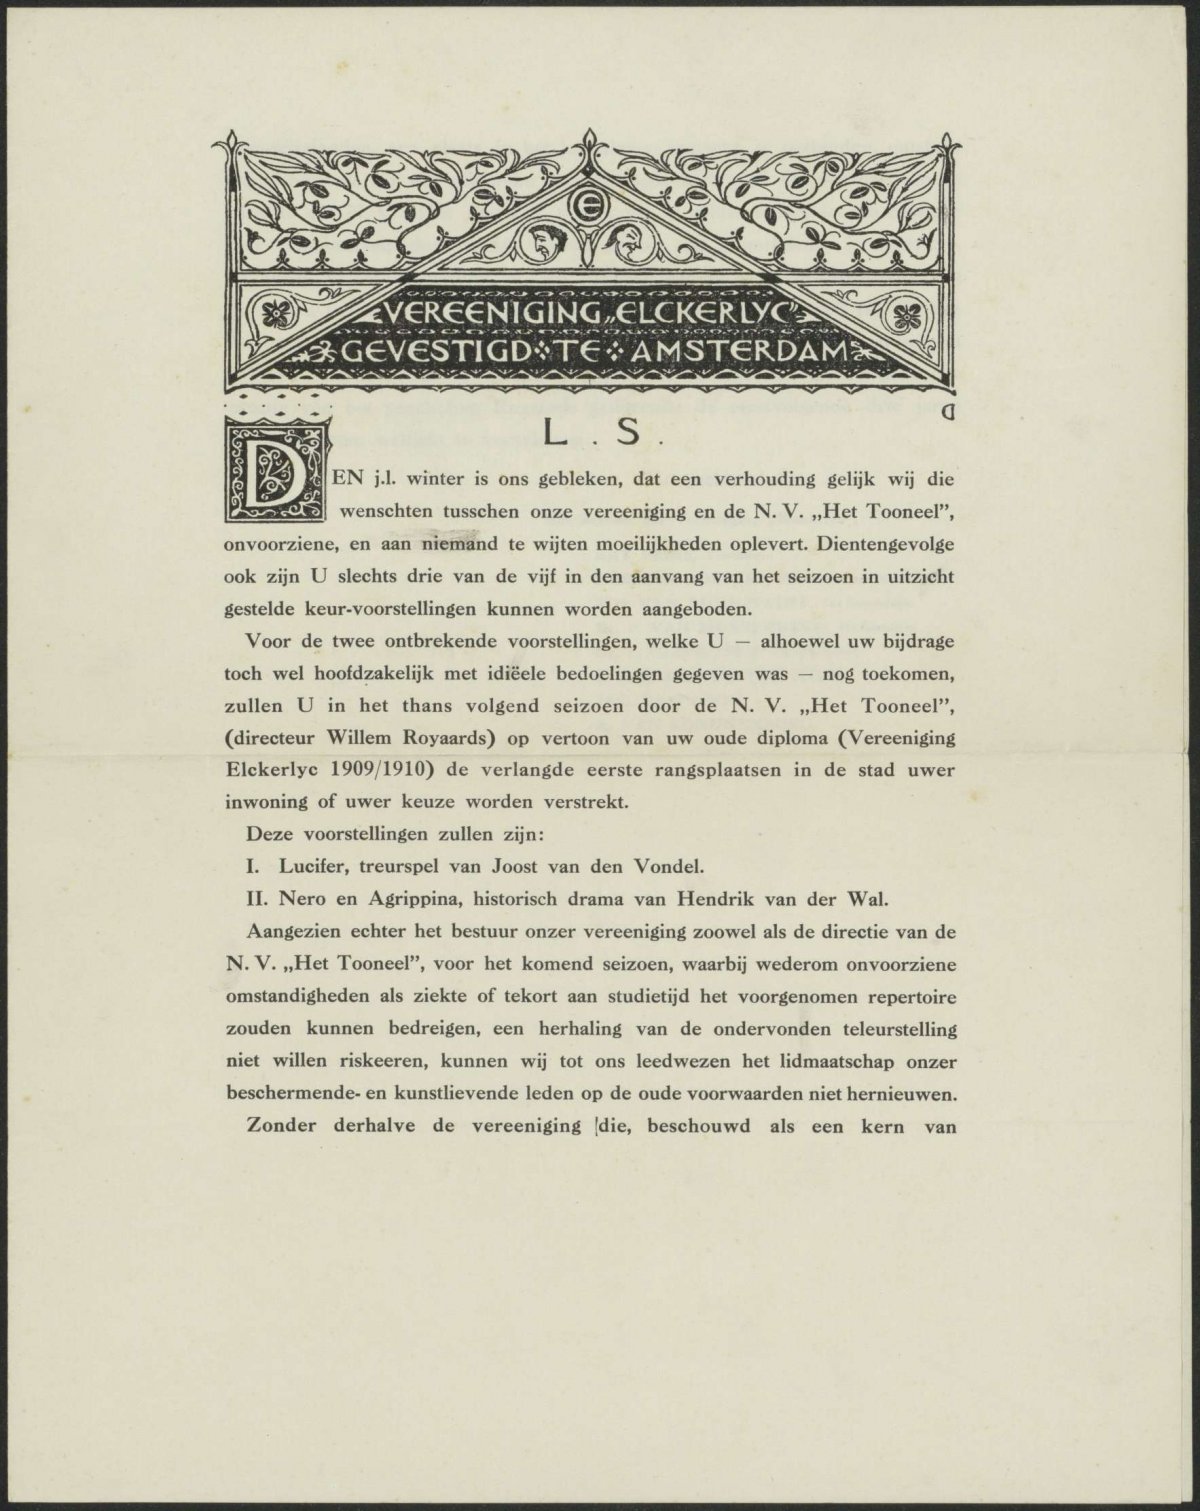 Verenigingsblad van de Vereeniging Elckerlyc te Amsterdam, Gerrit Willem Dijsselhof, c. 1909 - c. 1912